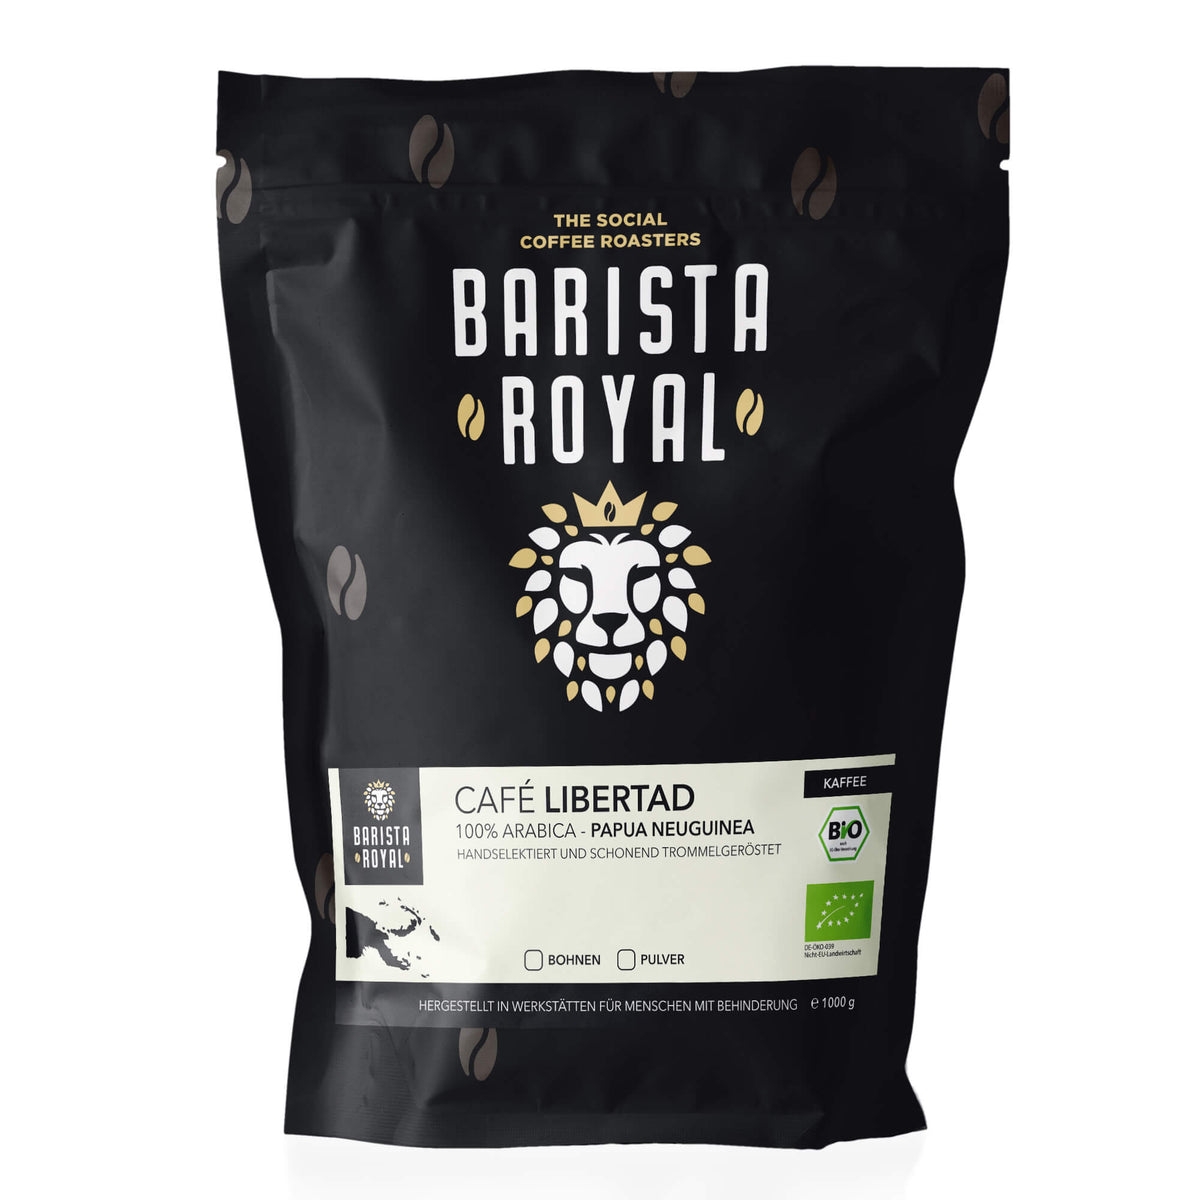 Bio Café Libertad (Kaffee) - Barista Royal GmbH